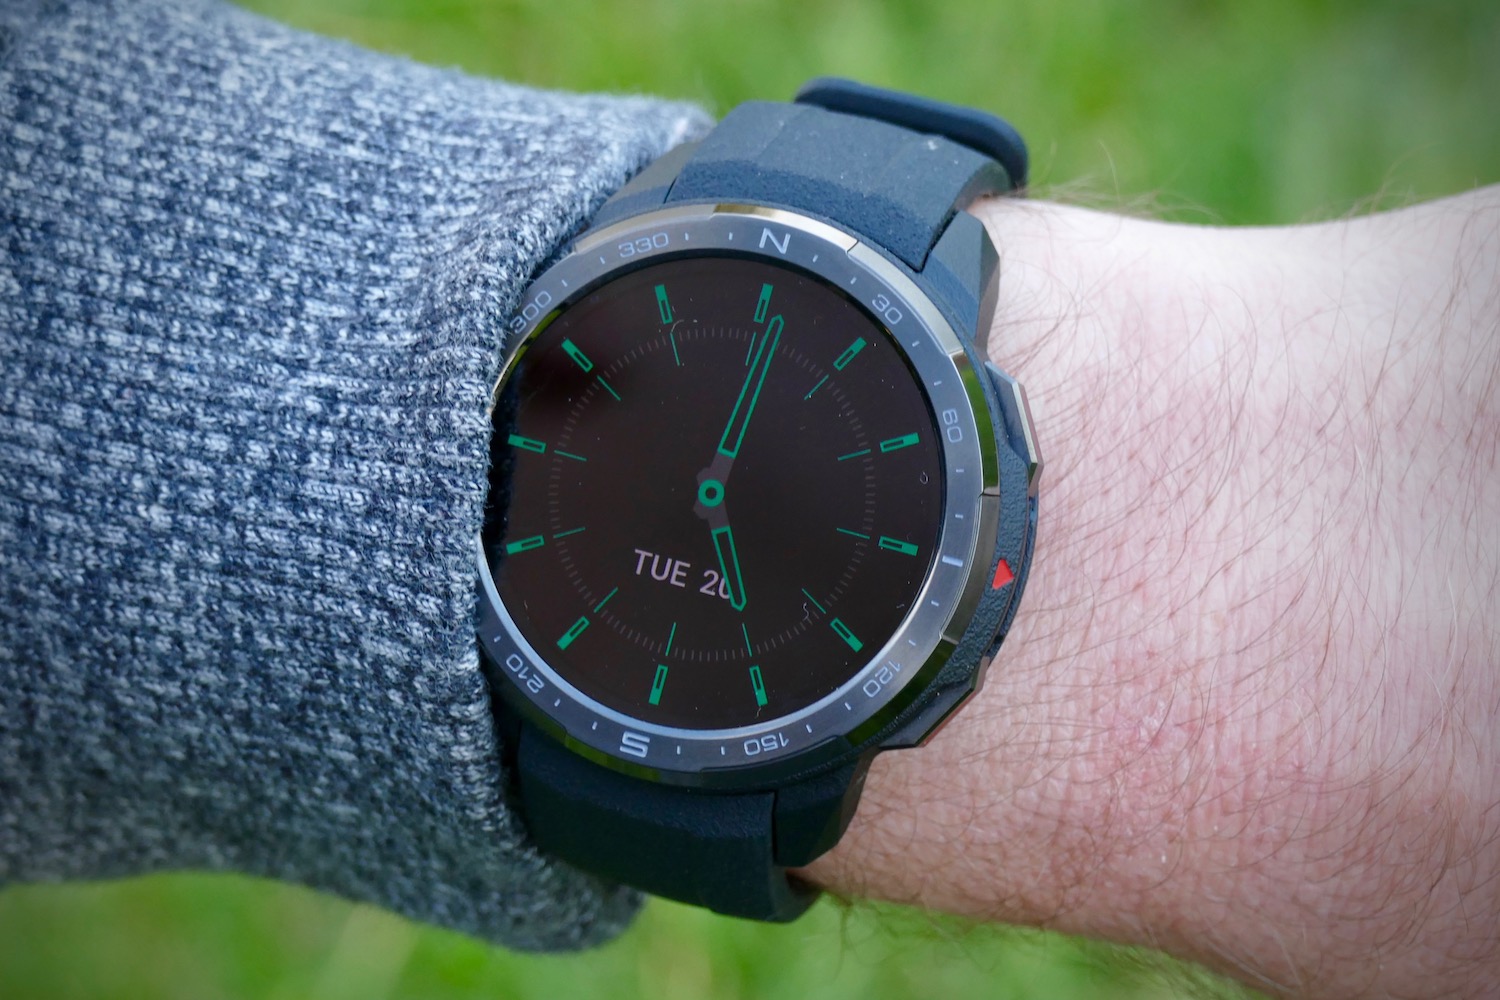 Honor Watch GS Pro: A Much Cheaper Alternative To A Samsung Galaxy Watch 3